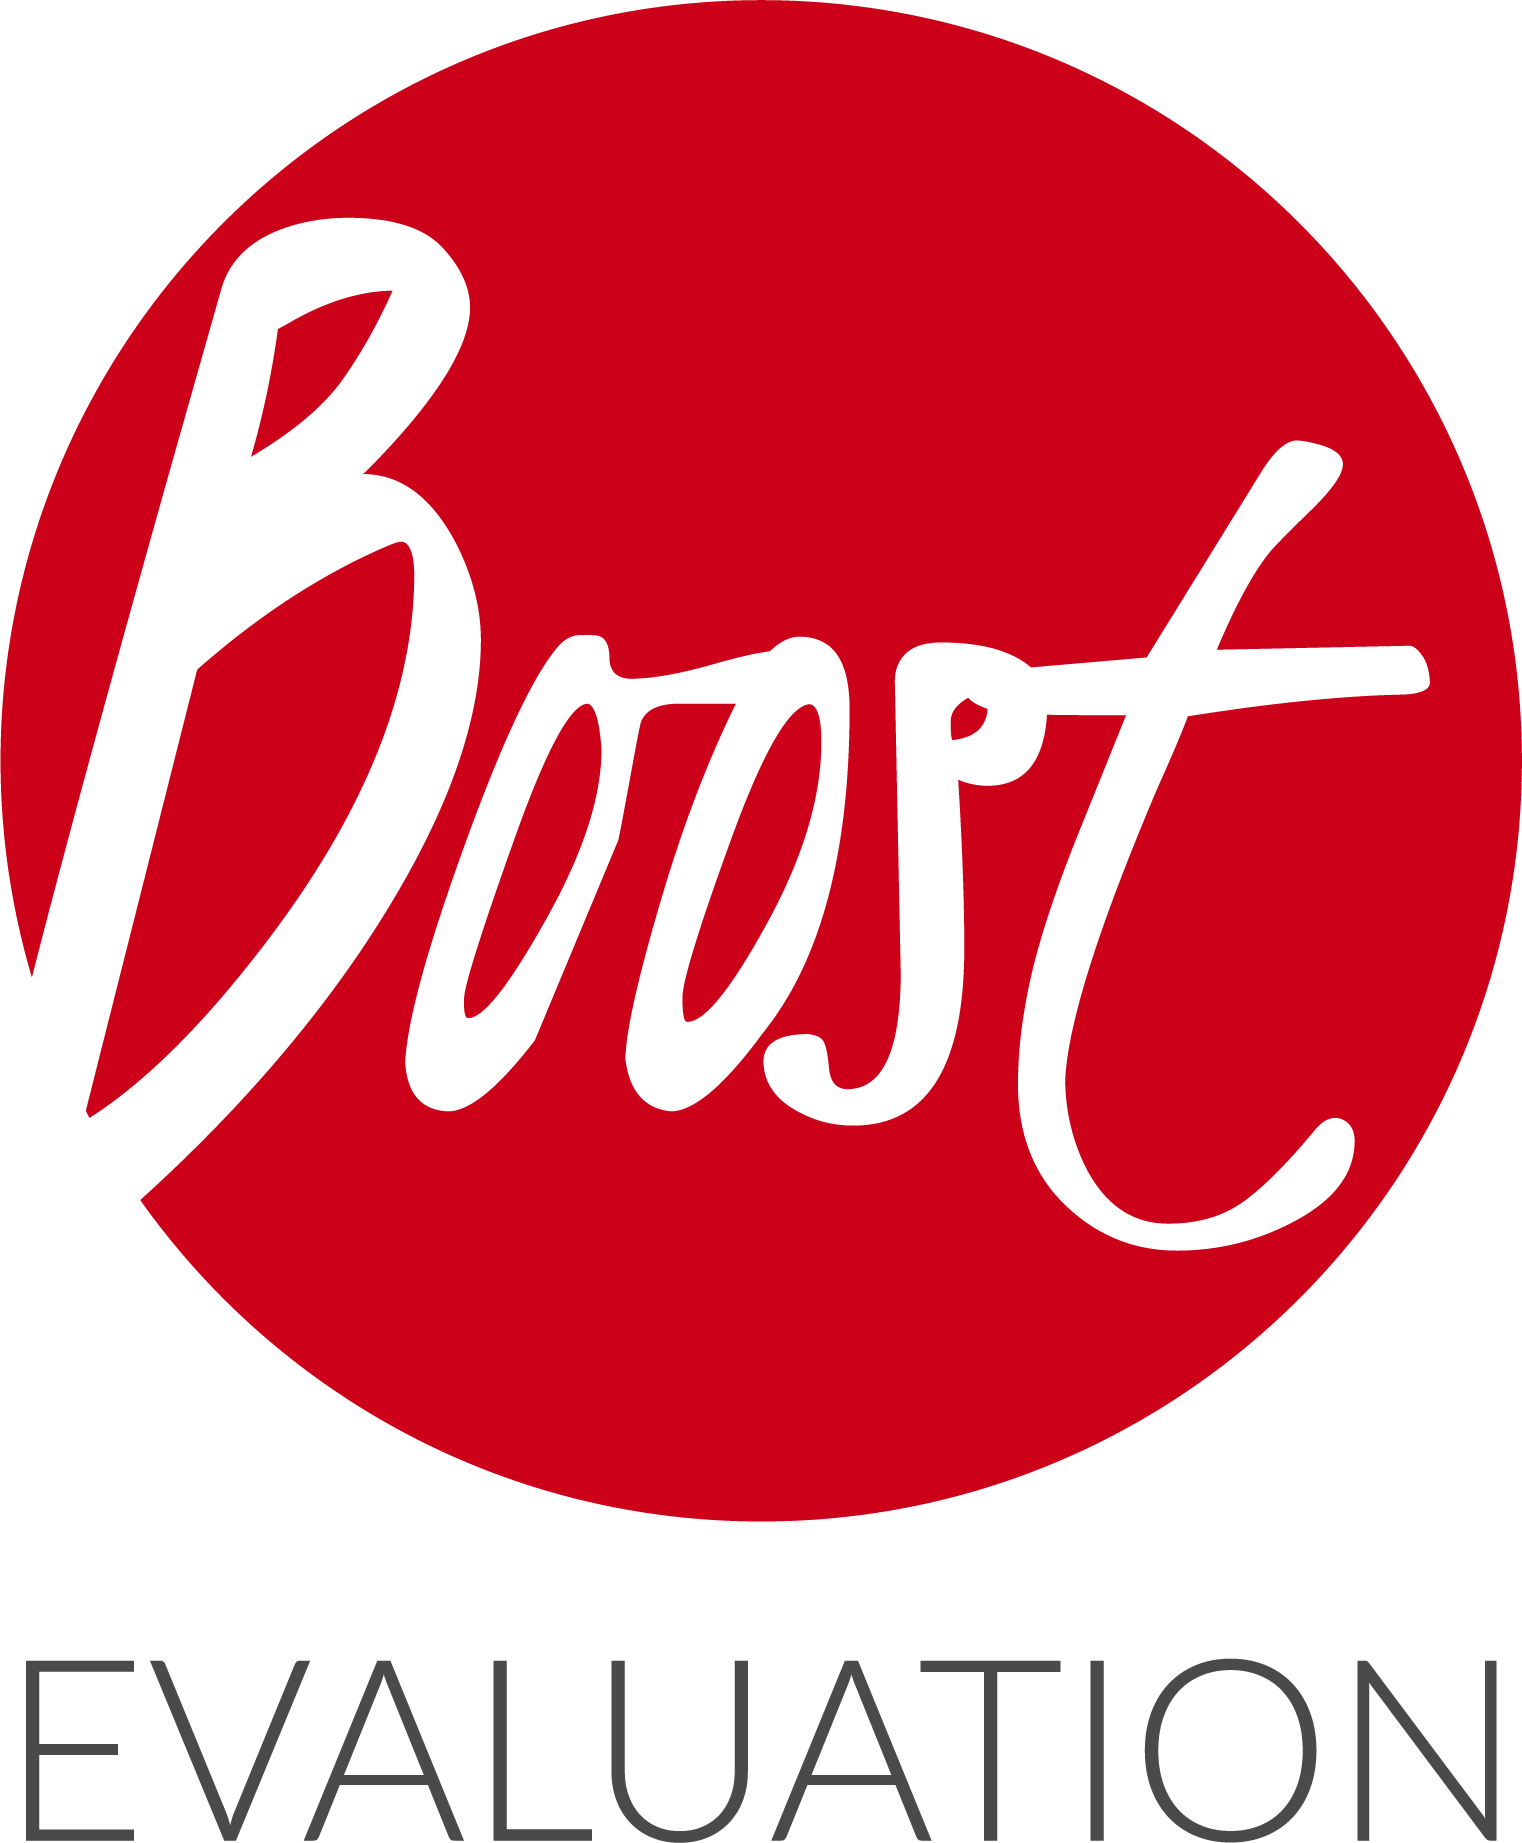 (c) Boost-evaluation.co.uk